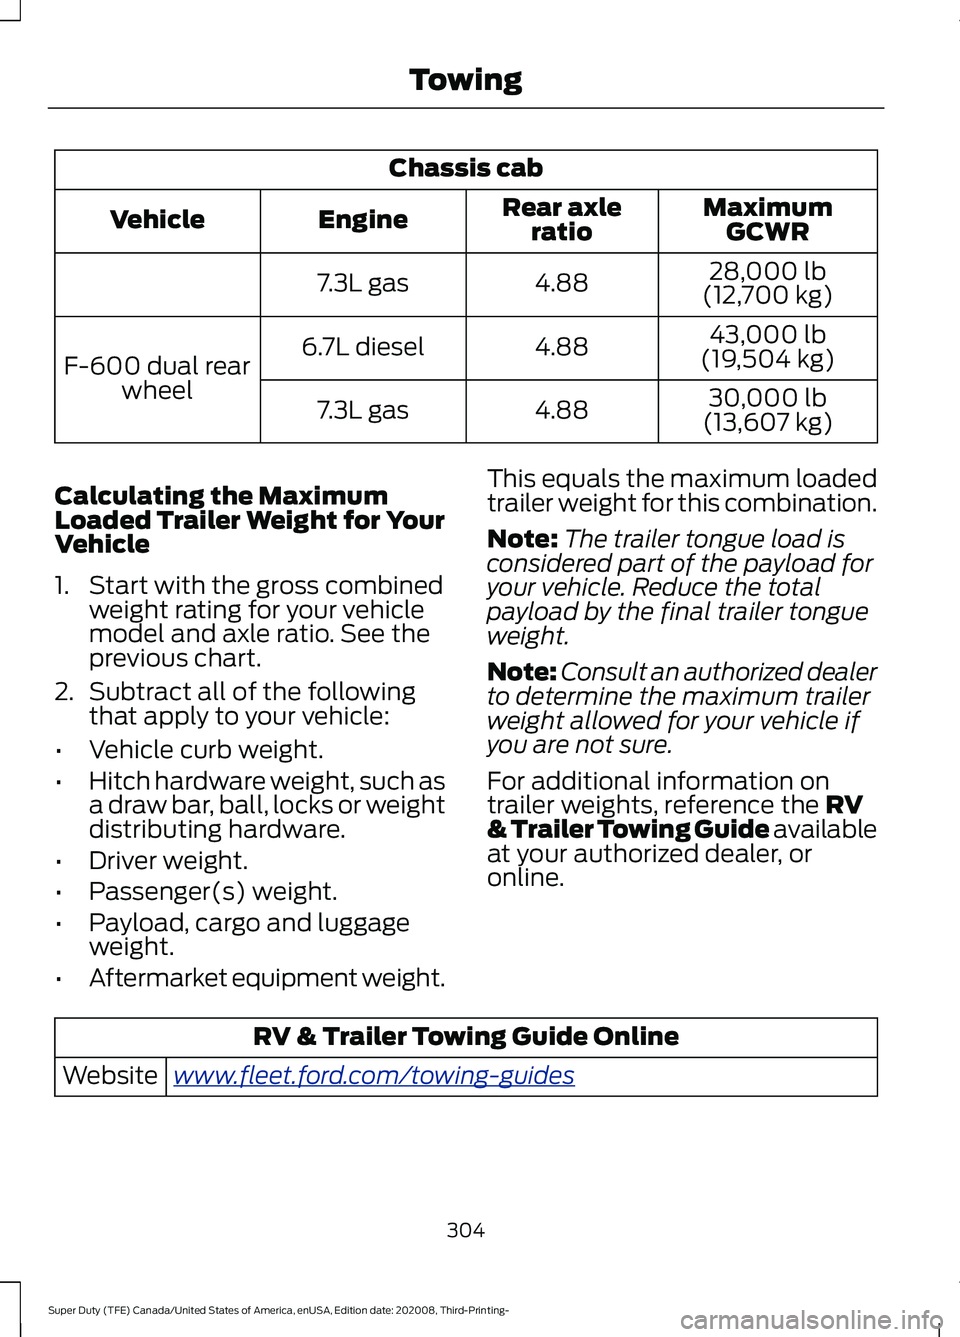 FORD F-550 2021  Owners Manual Chassis cab
MaximumGCWR
Rear axle
ratio
Engine
Vehicle
28,000 lb
(12,700 kg)
4.88
7.3L gas
43,000 lb
(19,504 kg)
4.88
6.7L diesel
F-600 dual rear
wheel 30,000 lb
(13,607 kg)
4.88
7.3L gas
Calculating 